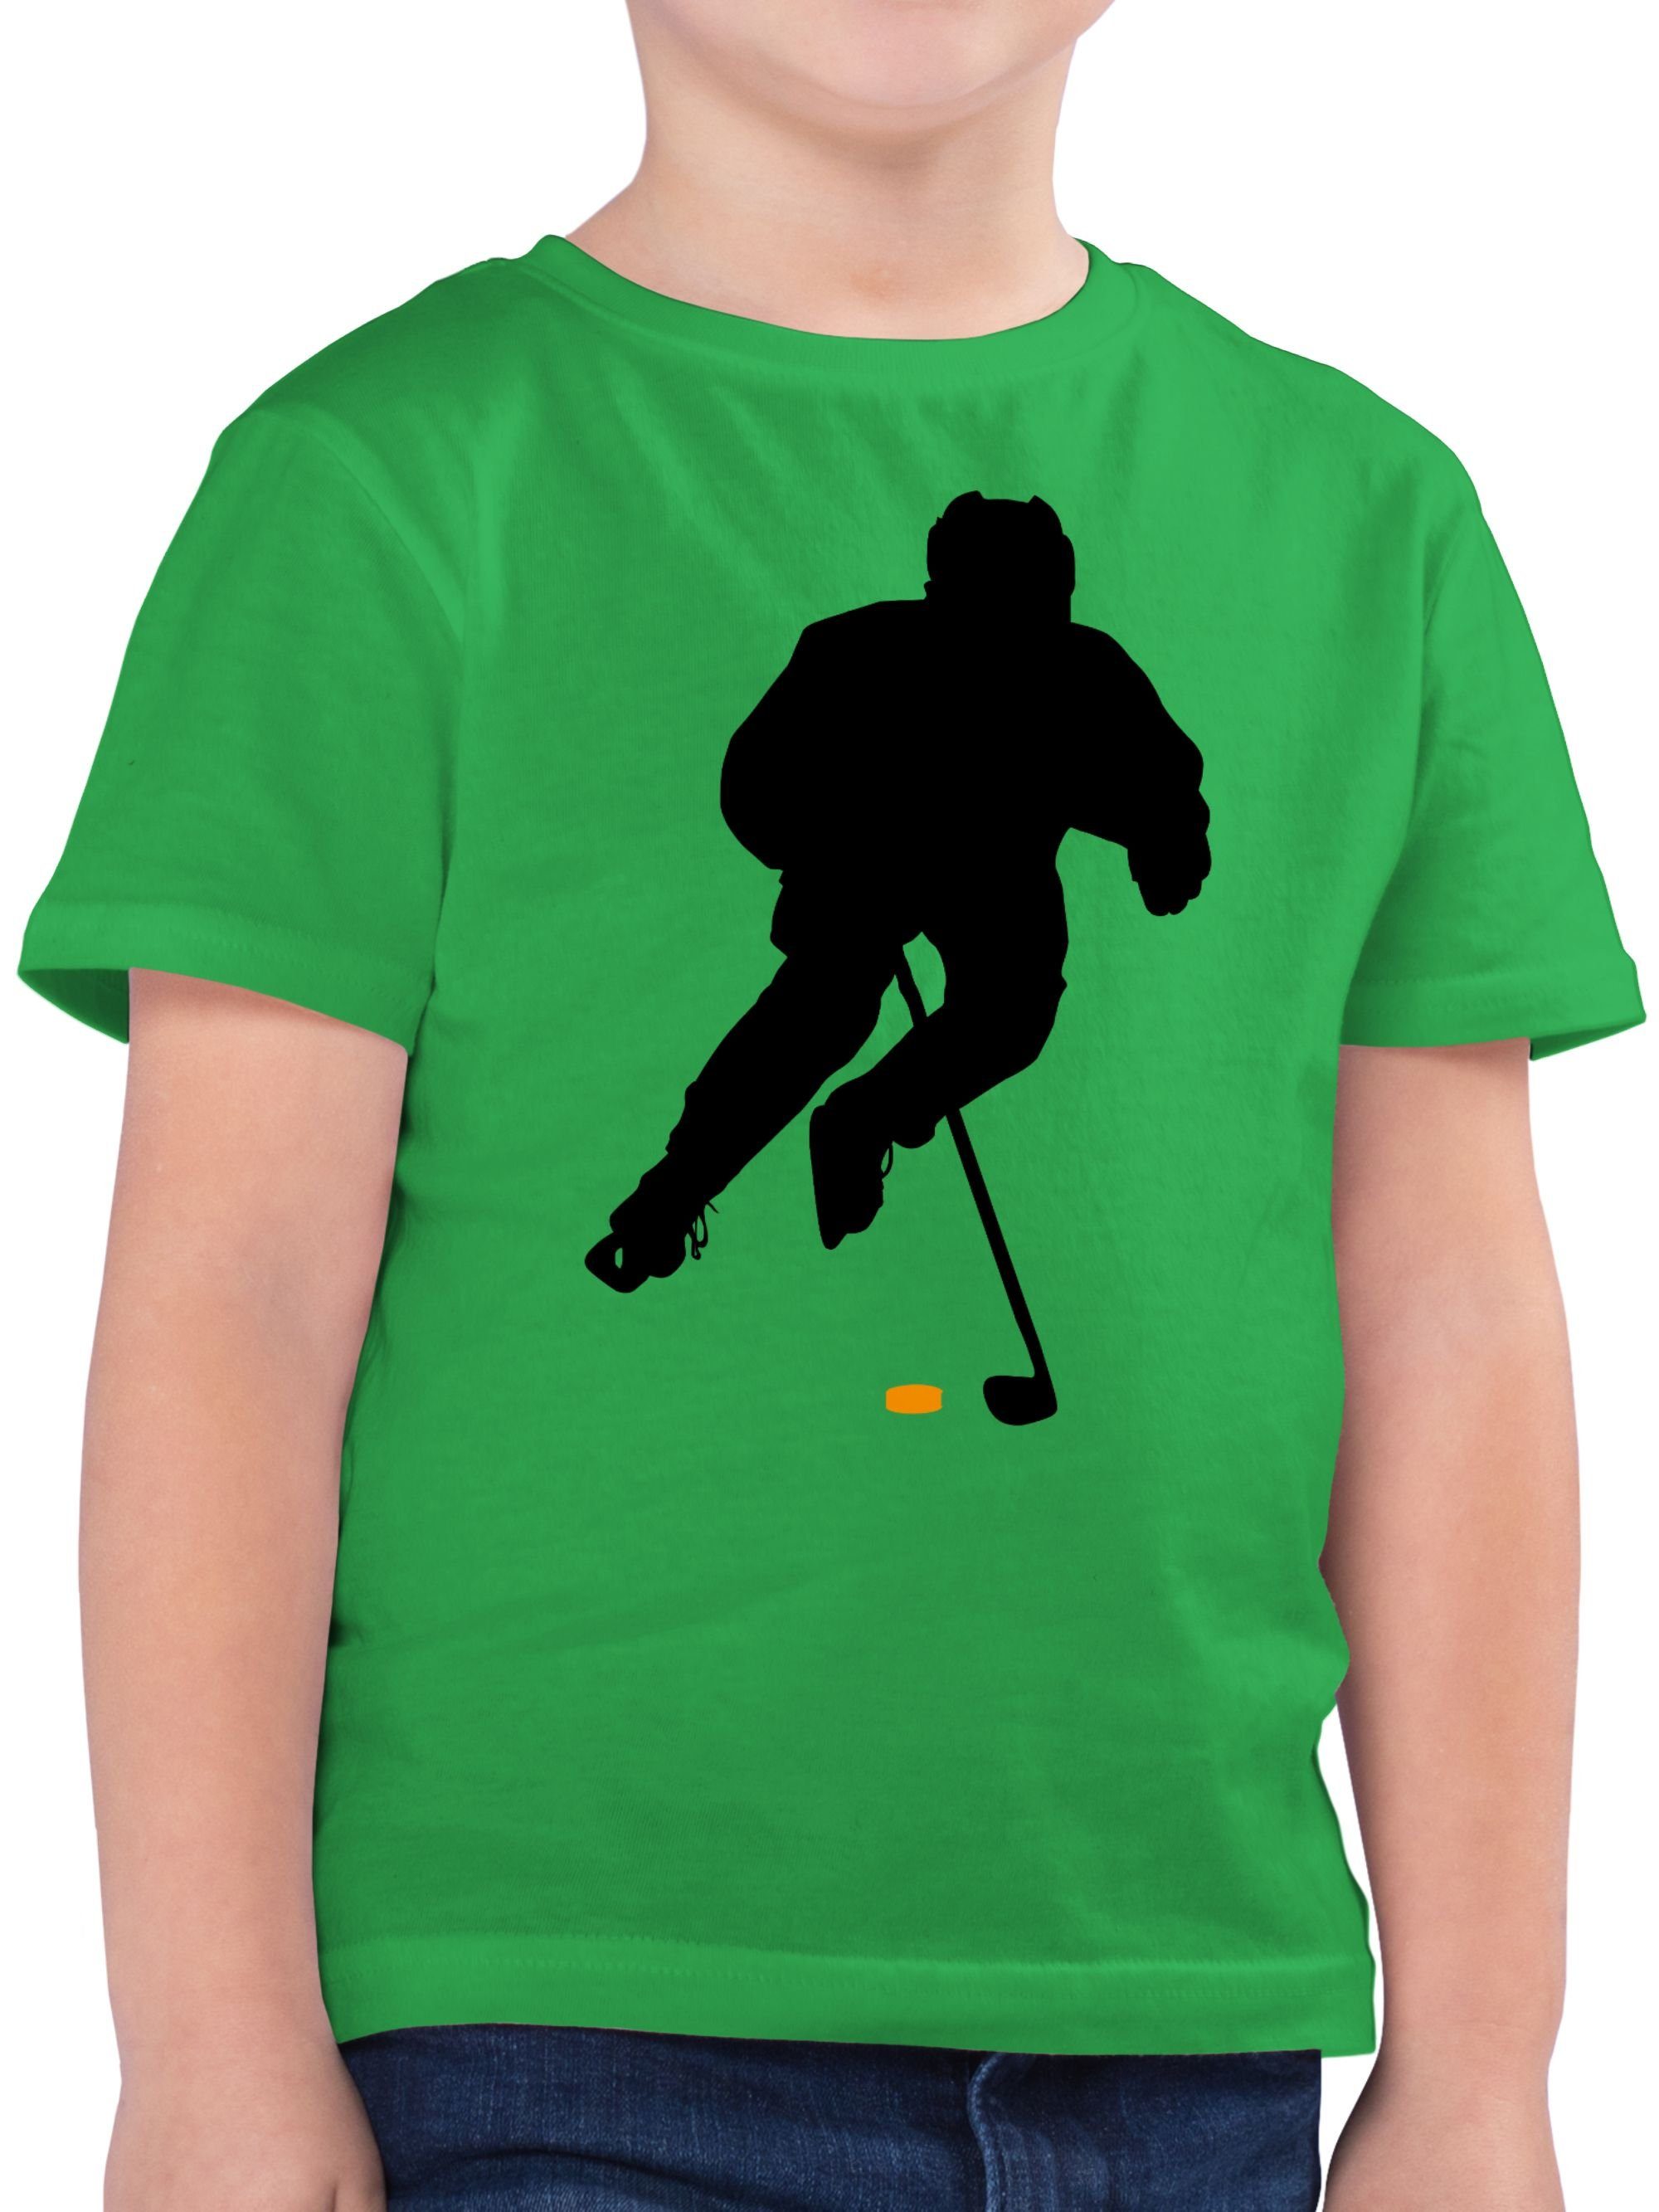 Shirtracer T-Shirt Eishockey Spieler Kinder Sport Kleidung 3 Grün